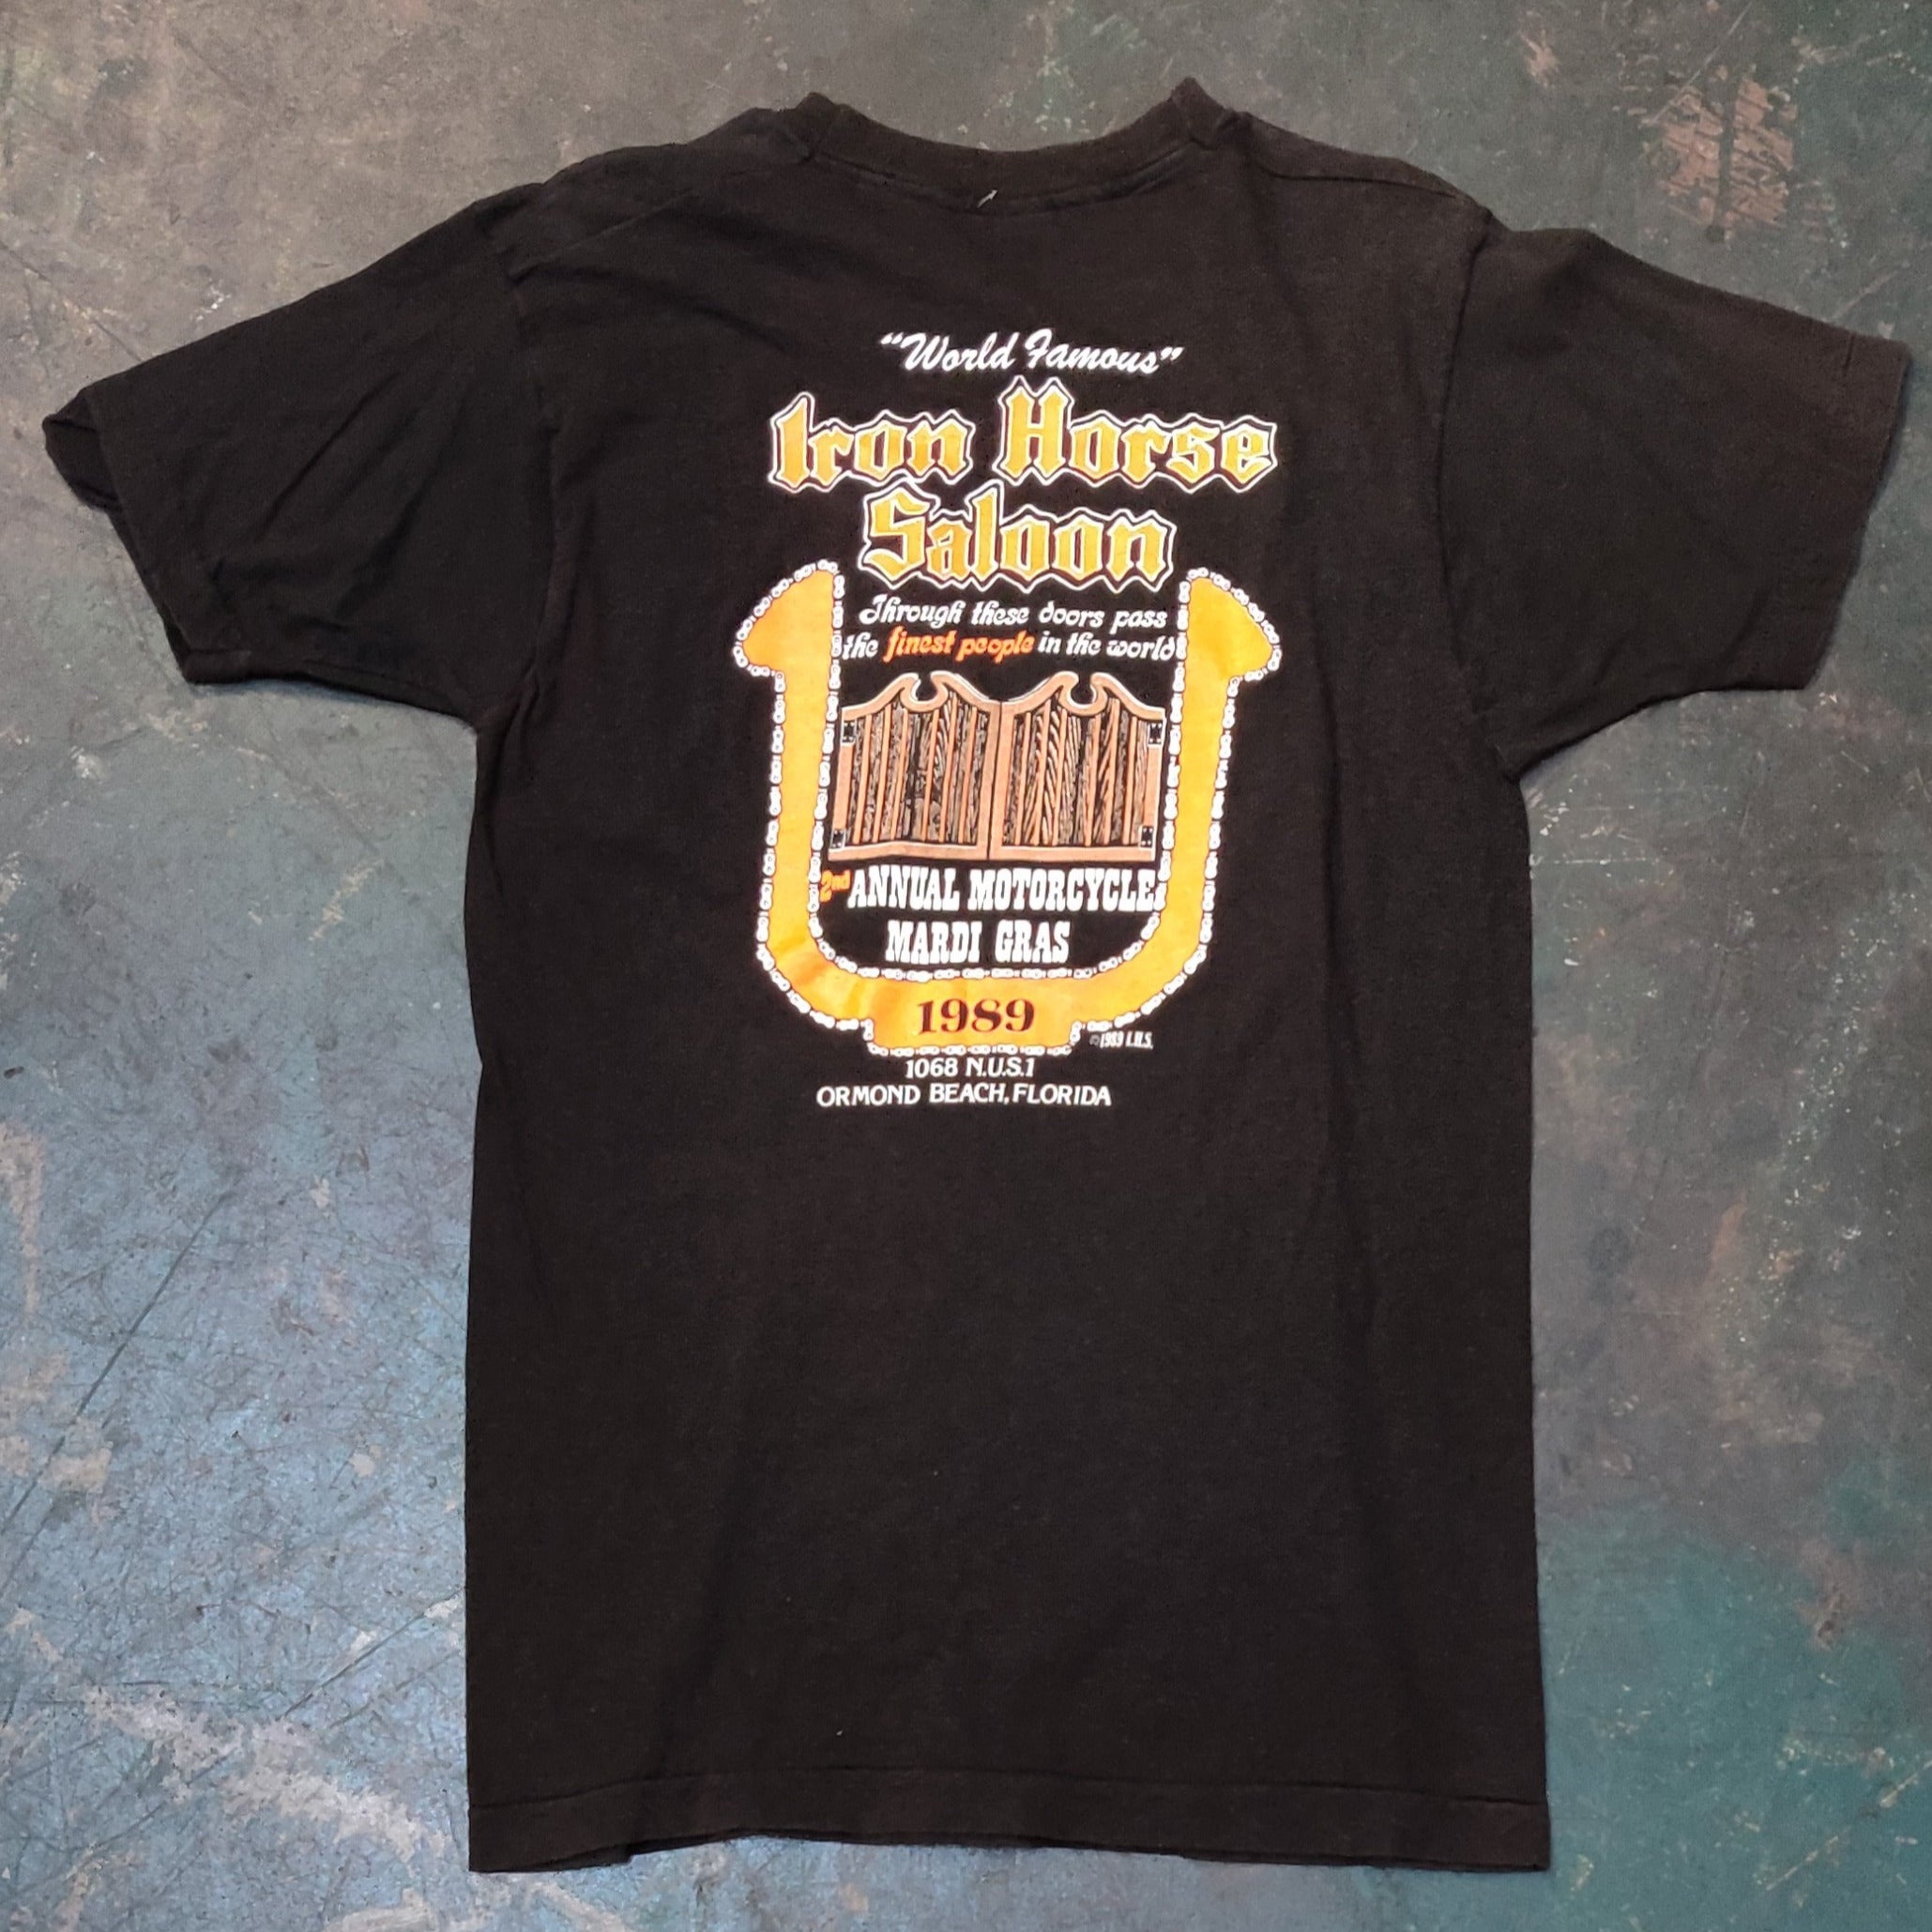 Vintage 1989 Iron Horse Saloon Motorcycle Mardi Gras Tee Shirt